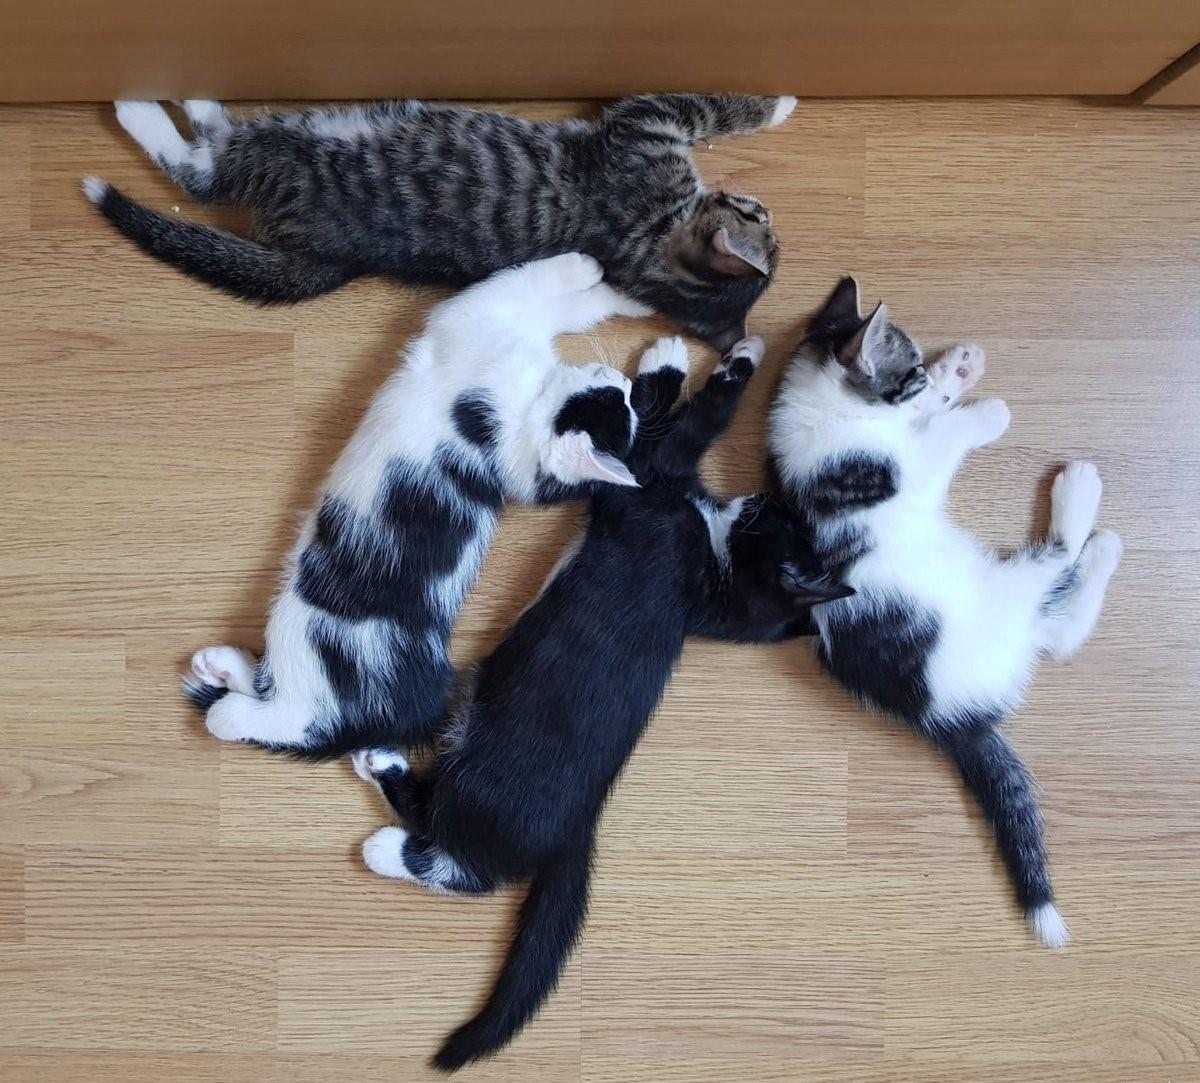 Четверо кошек. 4 Кошки. Четыре котенка. Четверо котов. Кошка лезет.